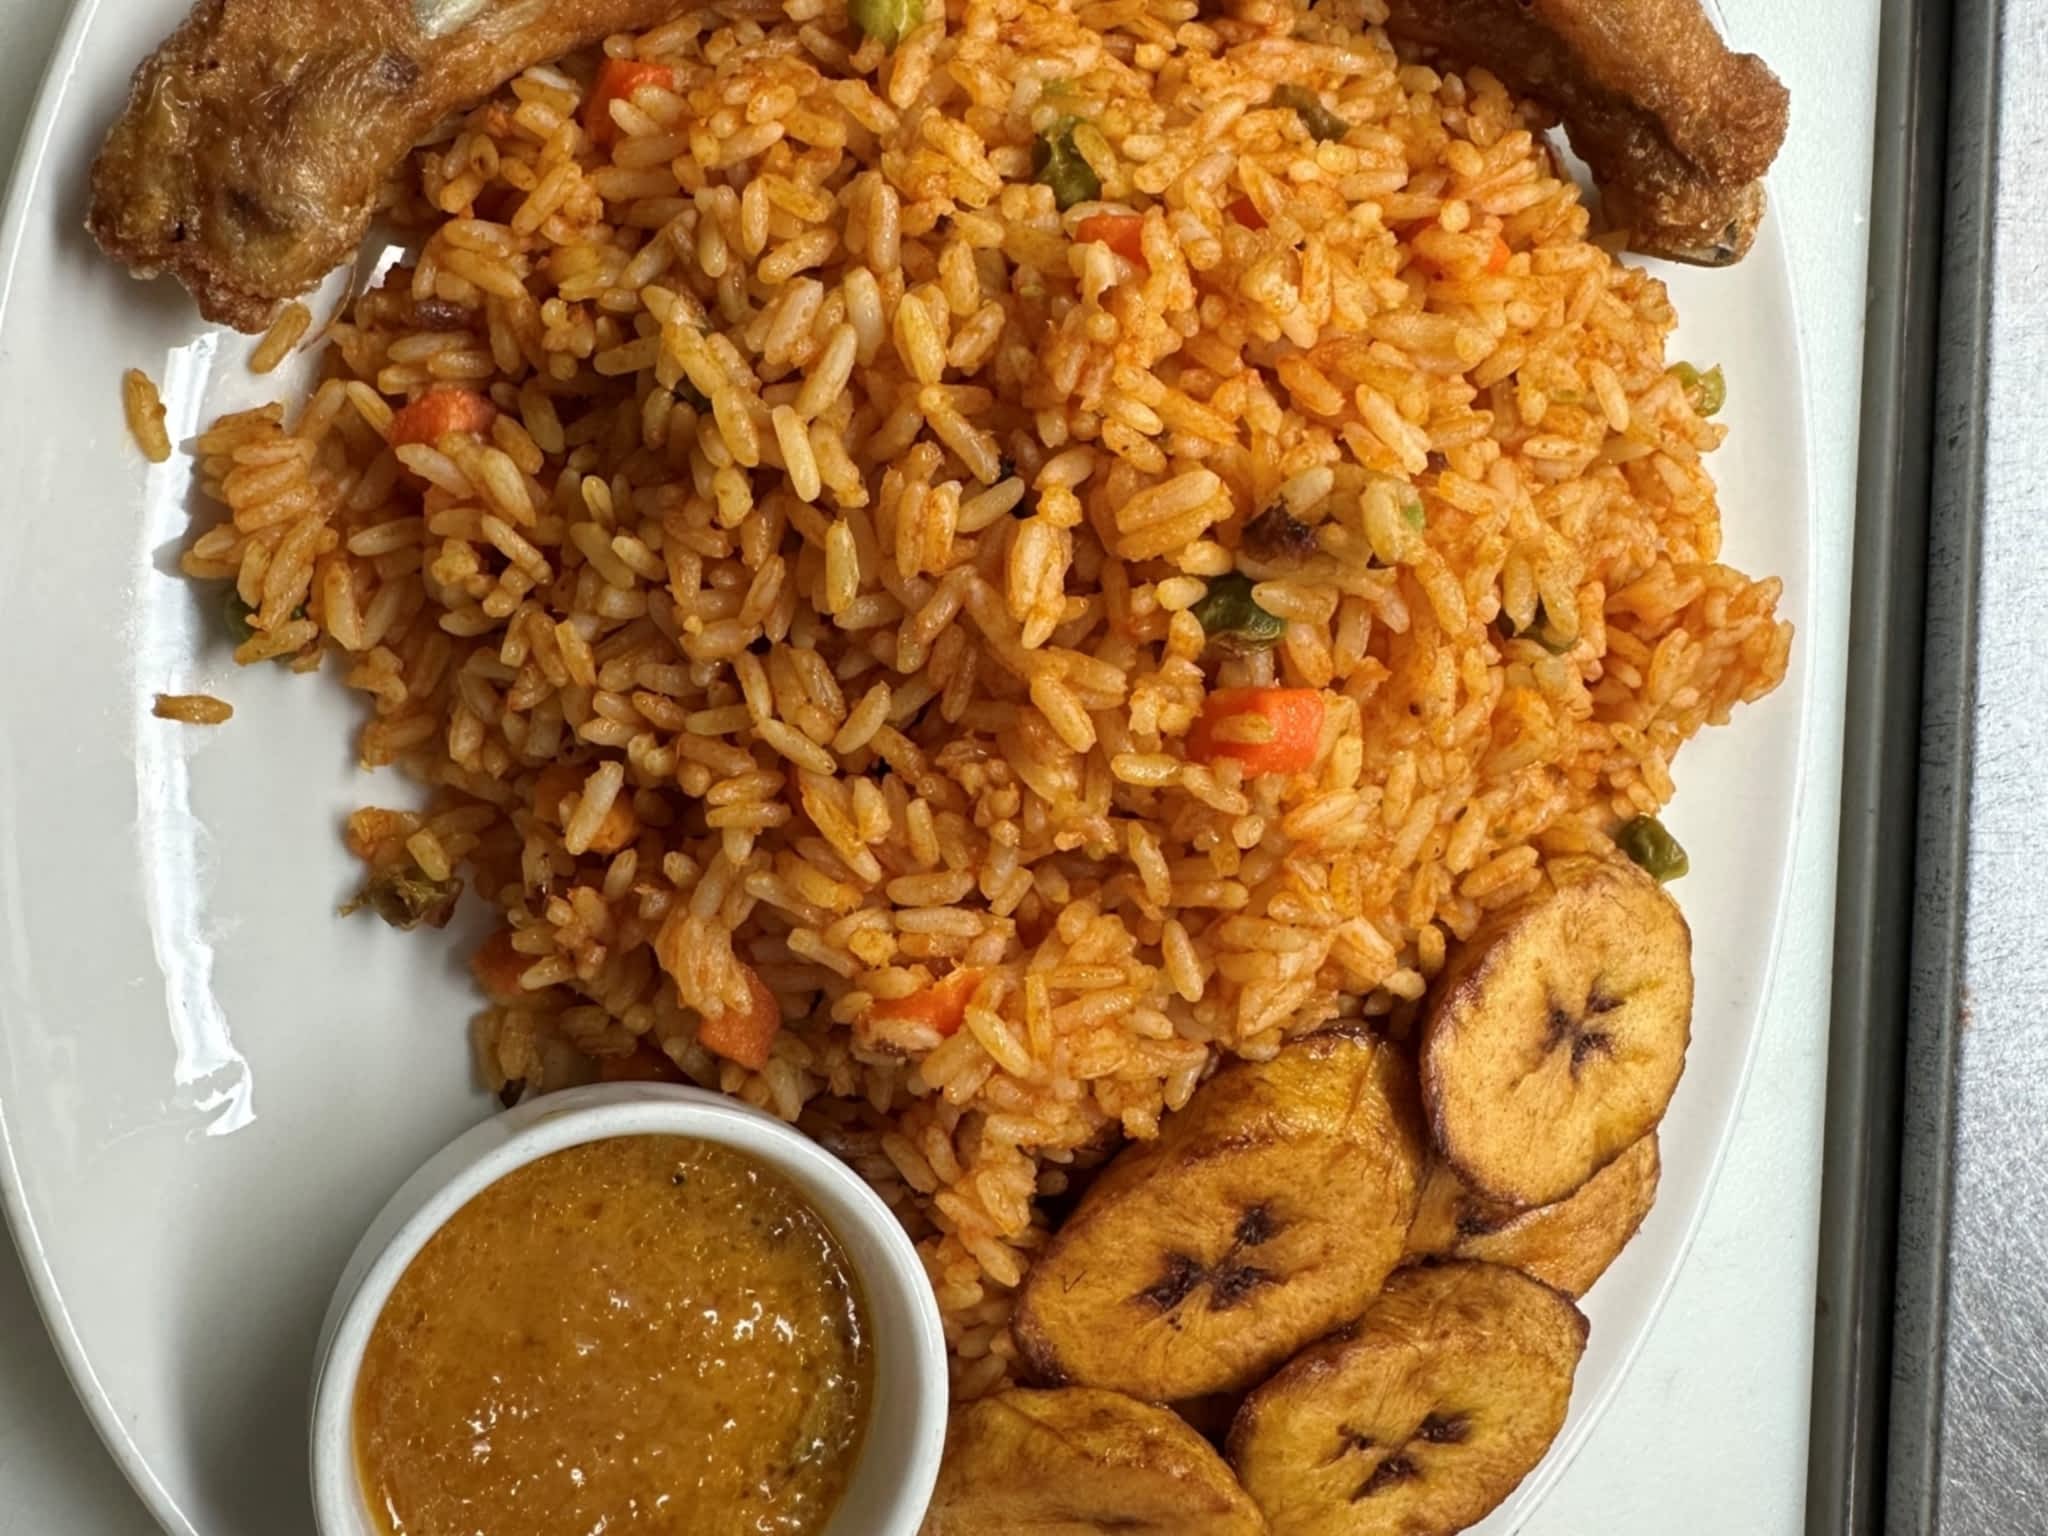 photo Liberian Cuisine On Wheels Ltd